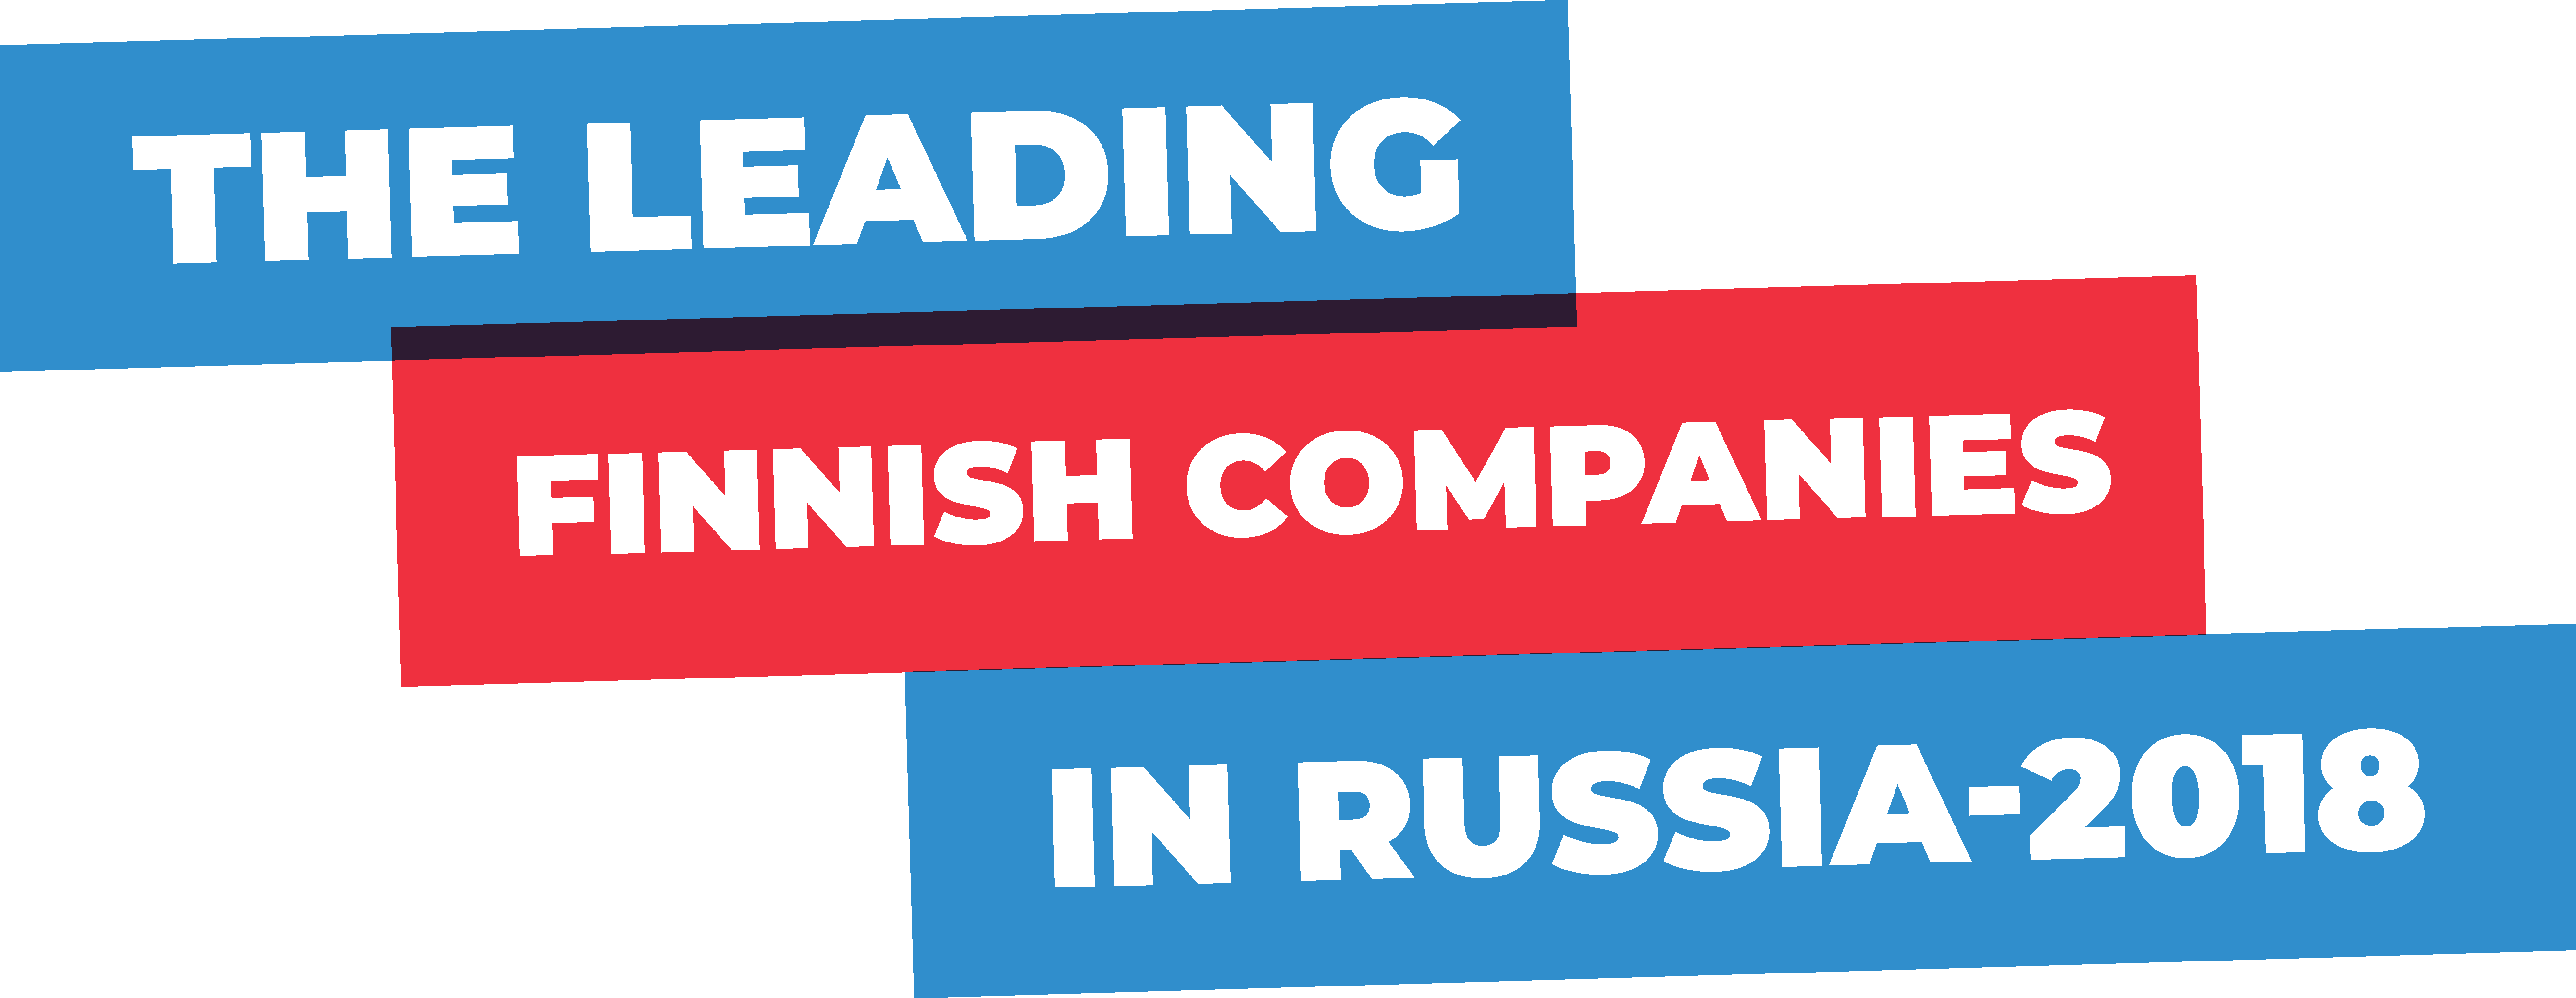 the leading finnish companies in russia 2018. исследование фонтанки на английском